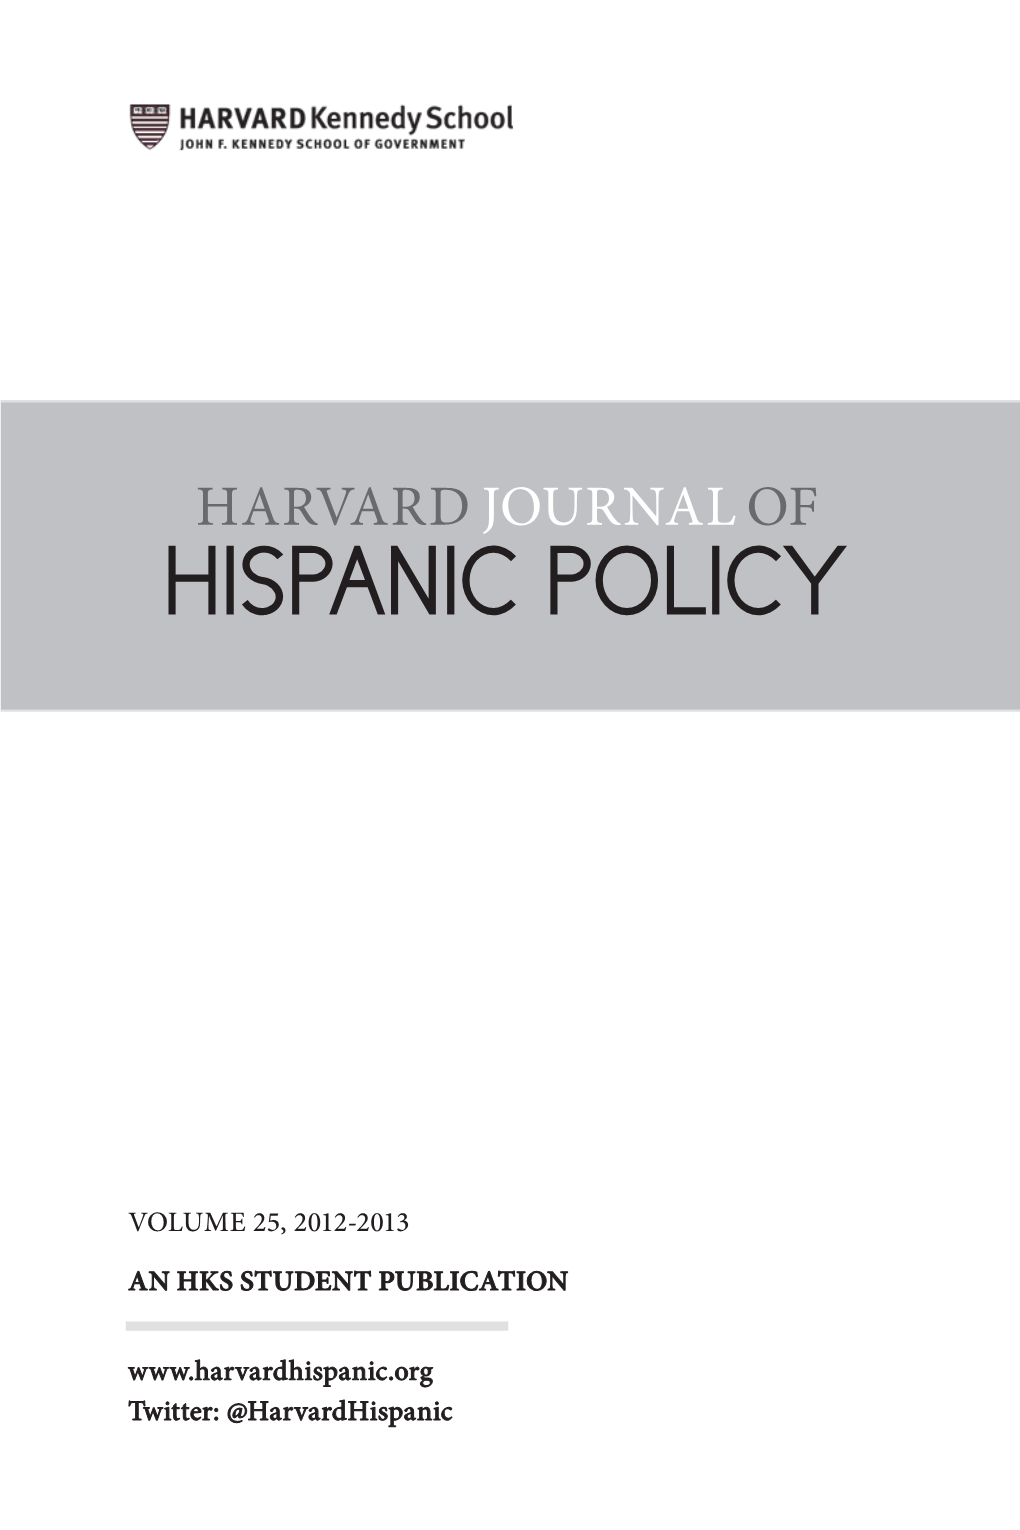 HKS Journal of Hispanic Policy